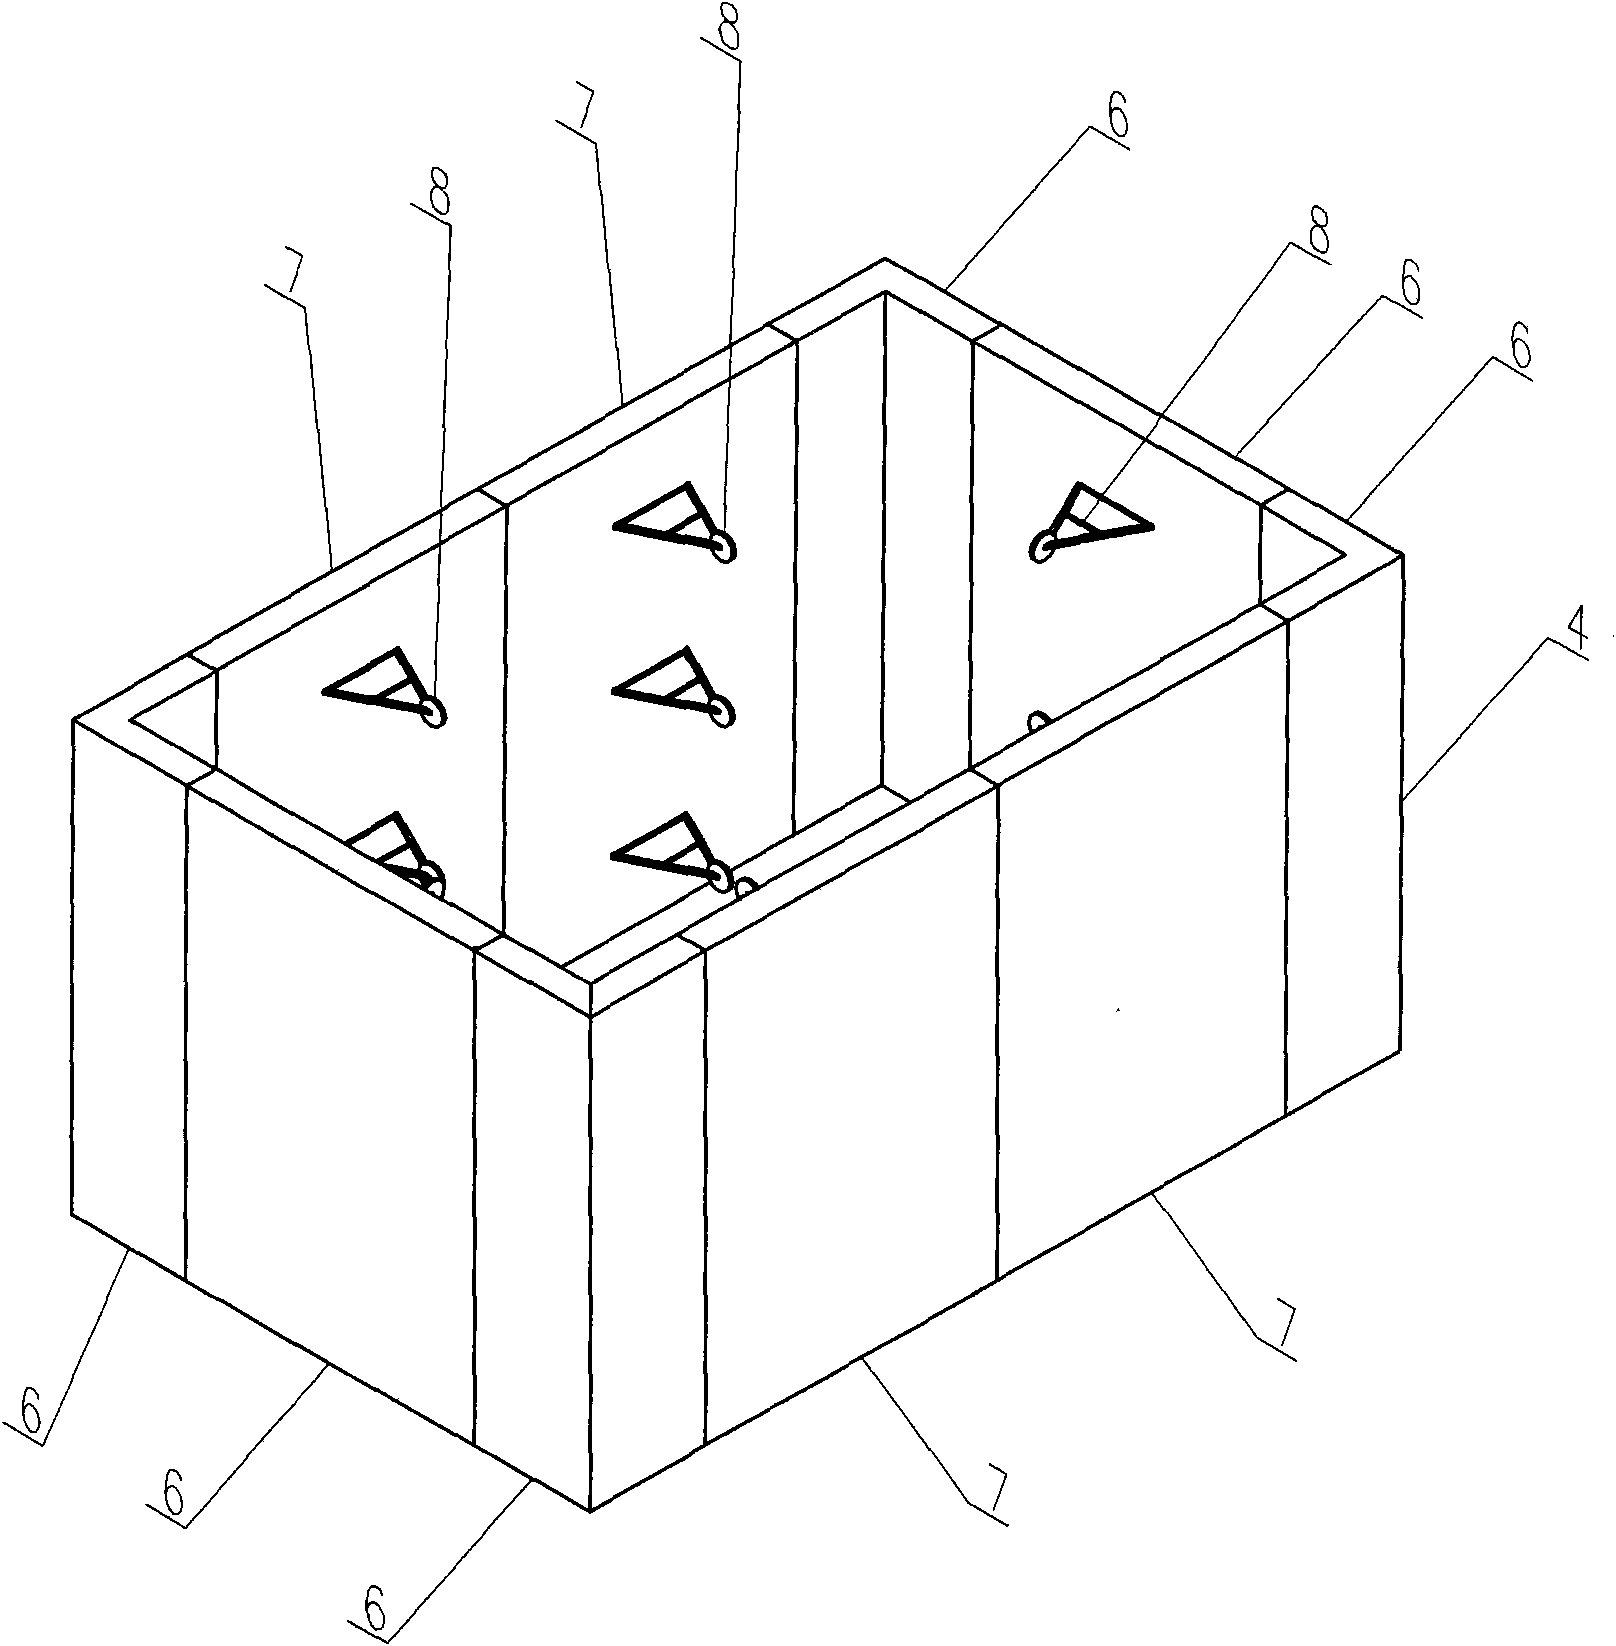 Construction method of steel cofferdam used for reinforcing underwater pier